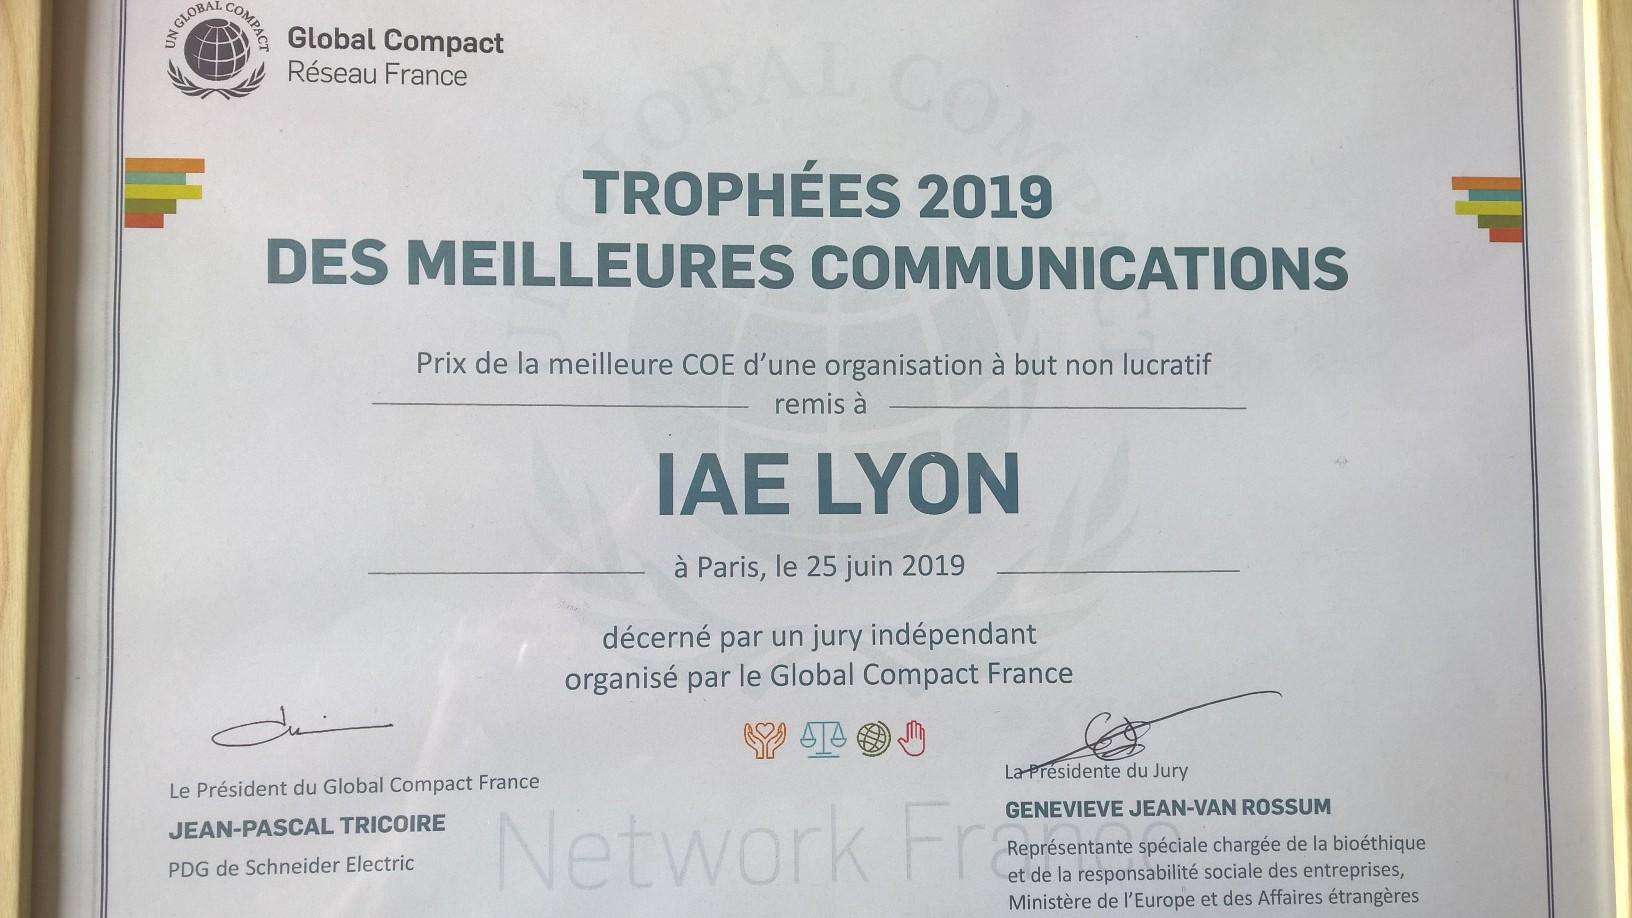 Trophées Global Compact France 2019 - iaelyon